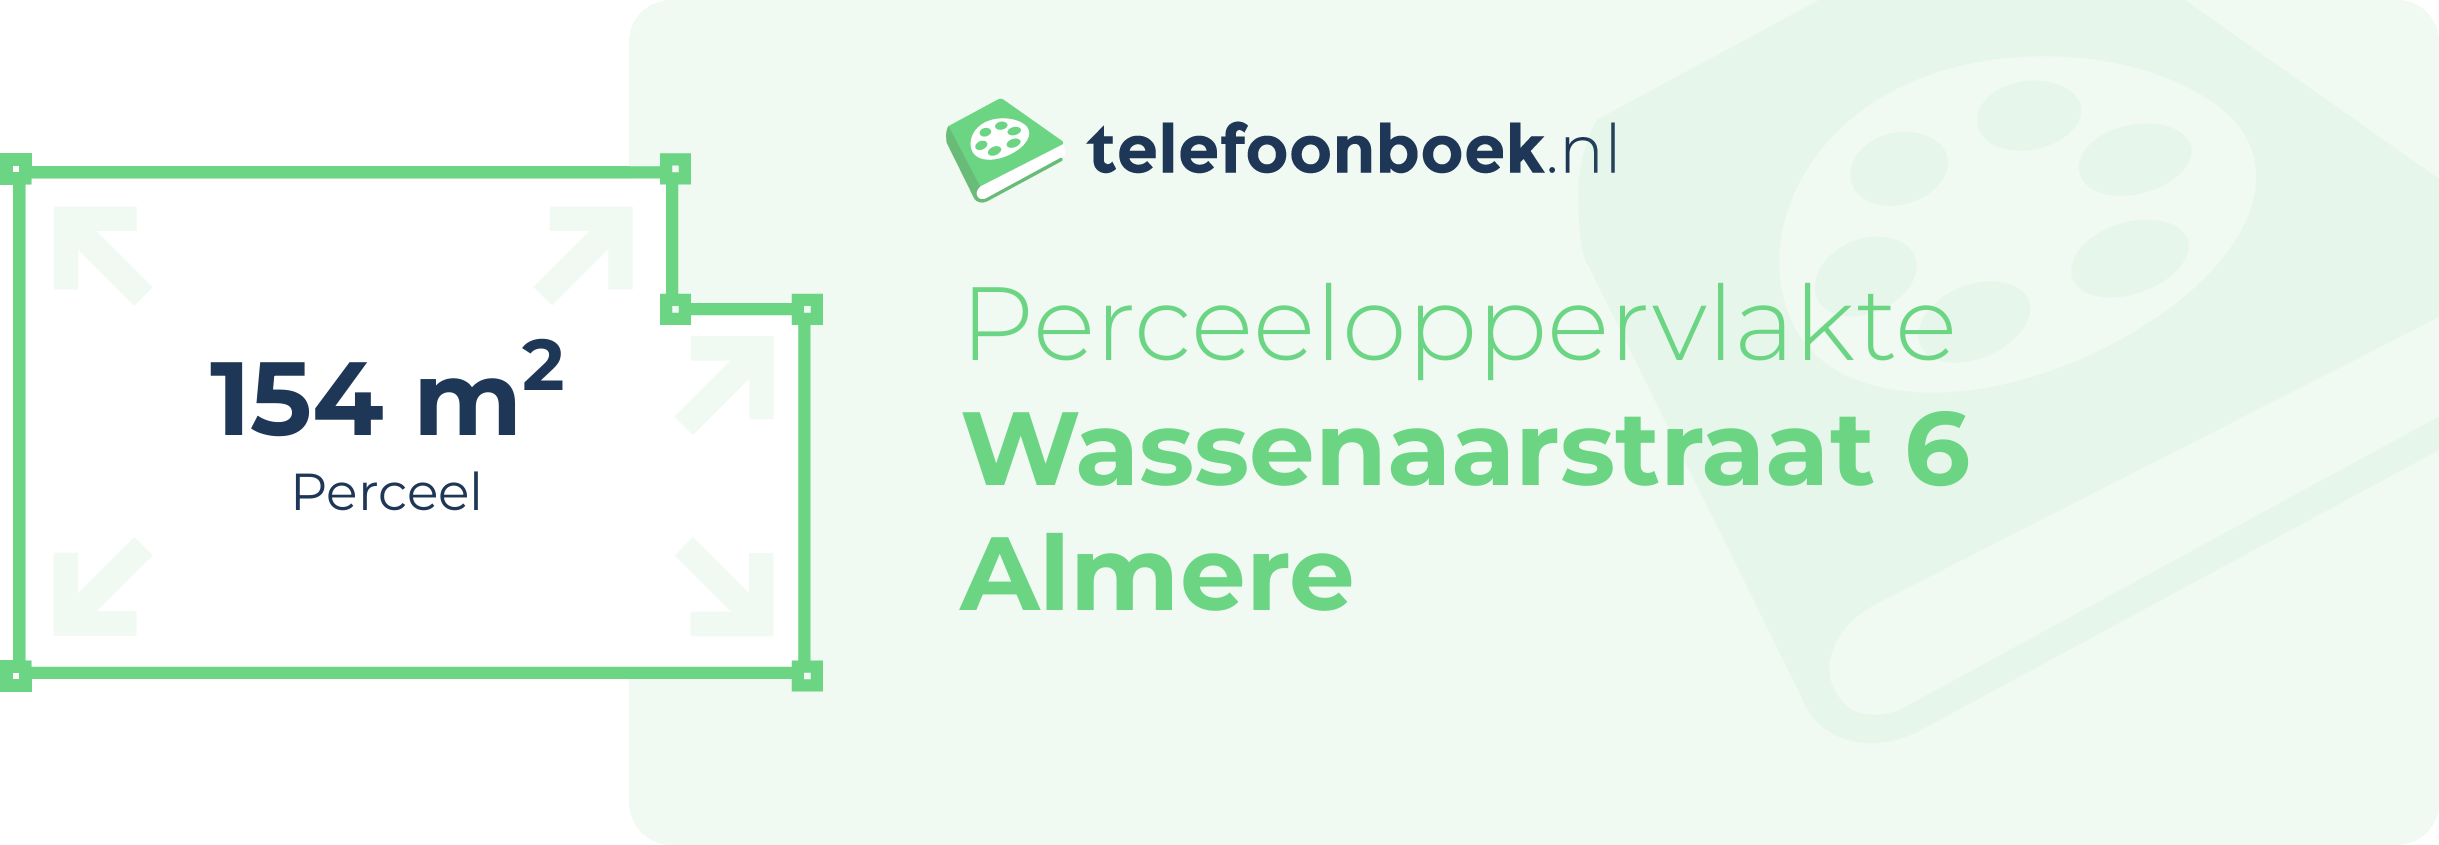 Perceeloppervlakte Wassenaarstraat 6 Almere